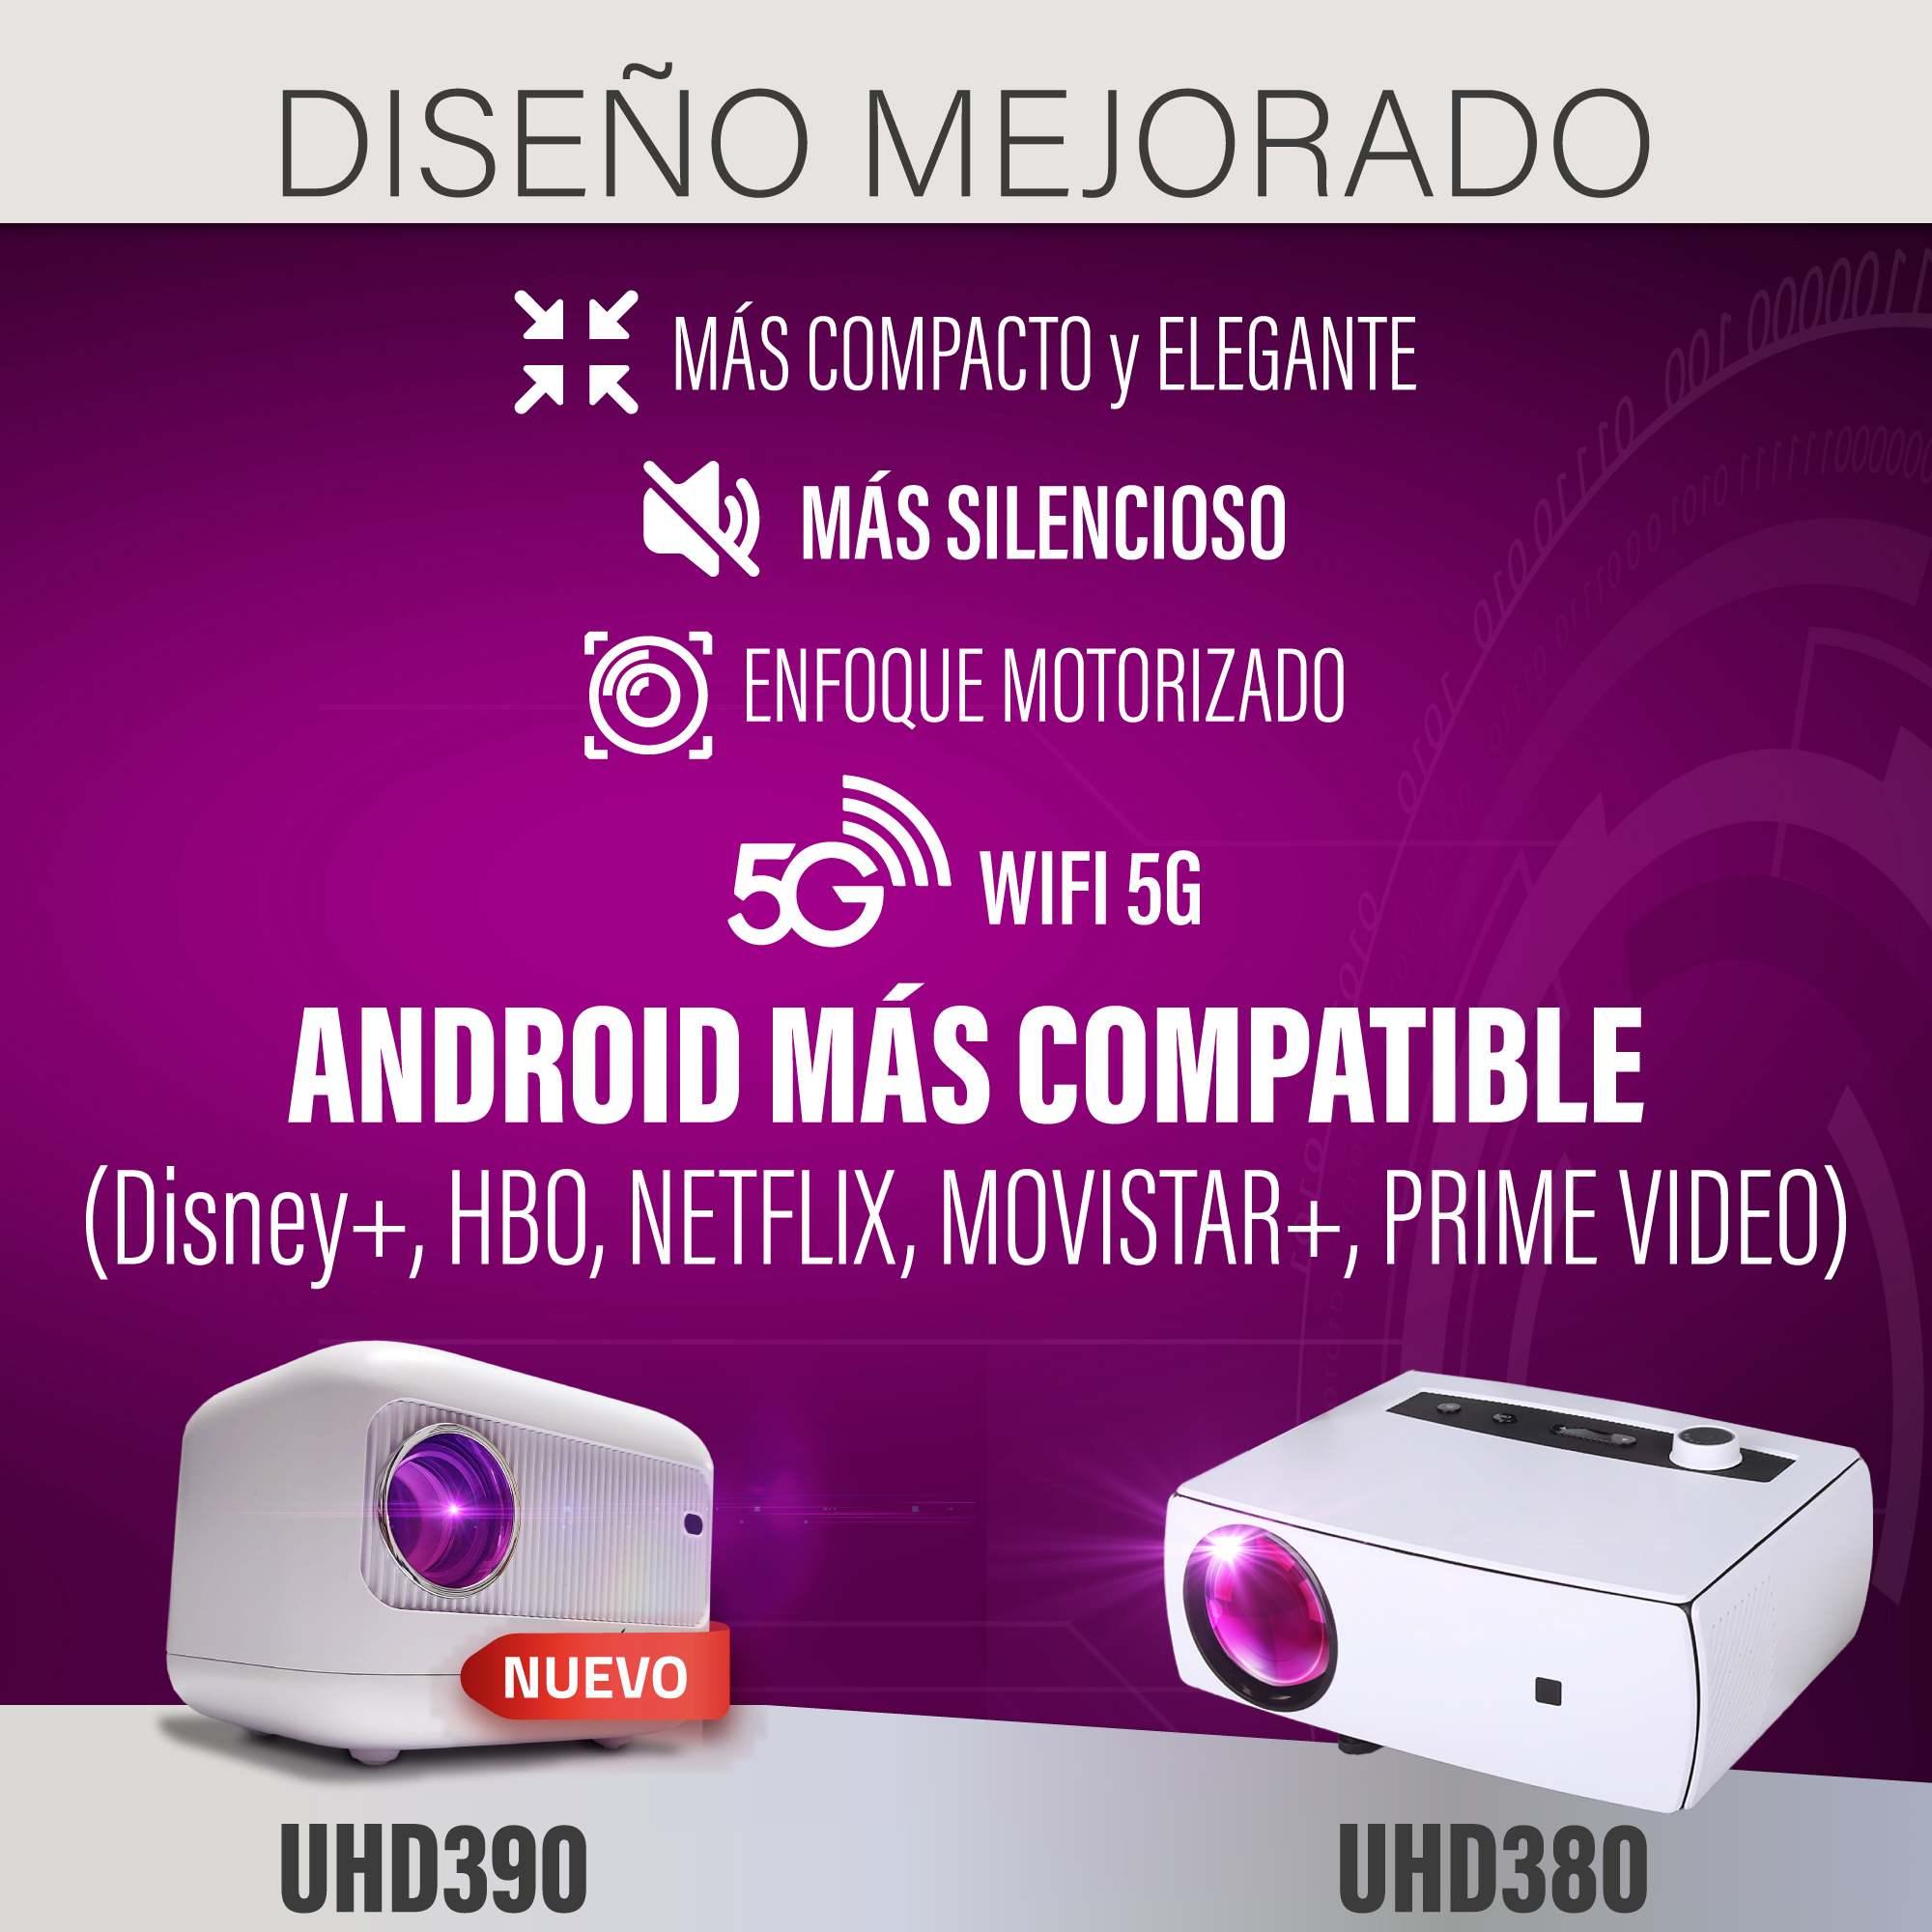 Luximagen UHD390 (Decodificación 4K, AndroidTV, Silencioso) > ¿Qué